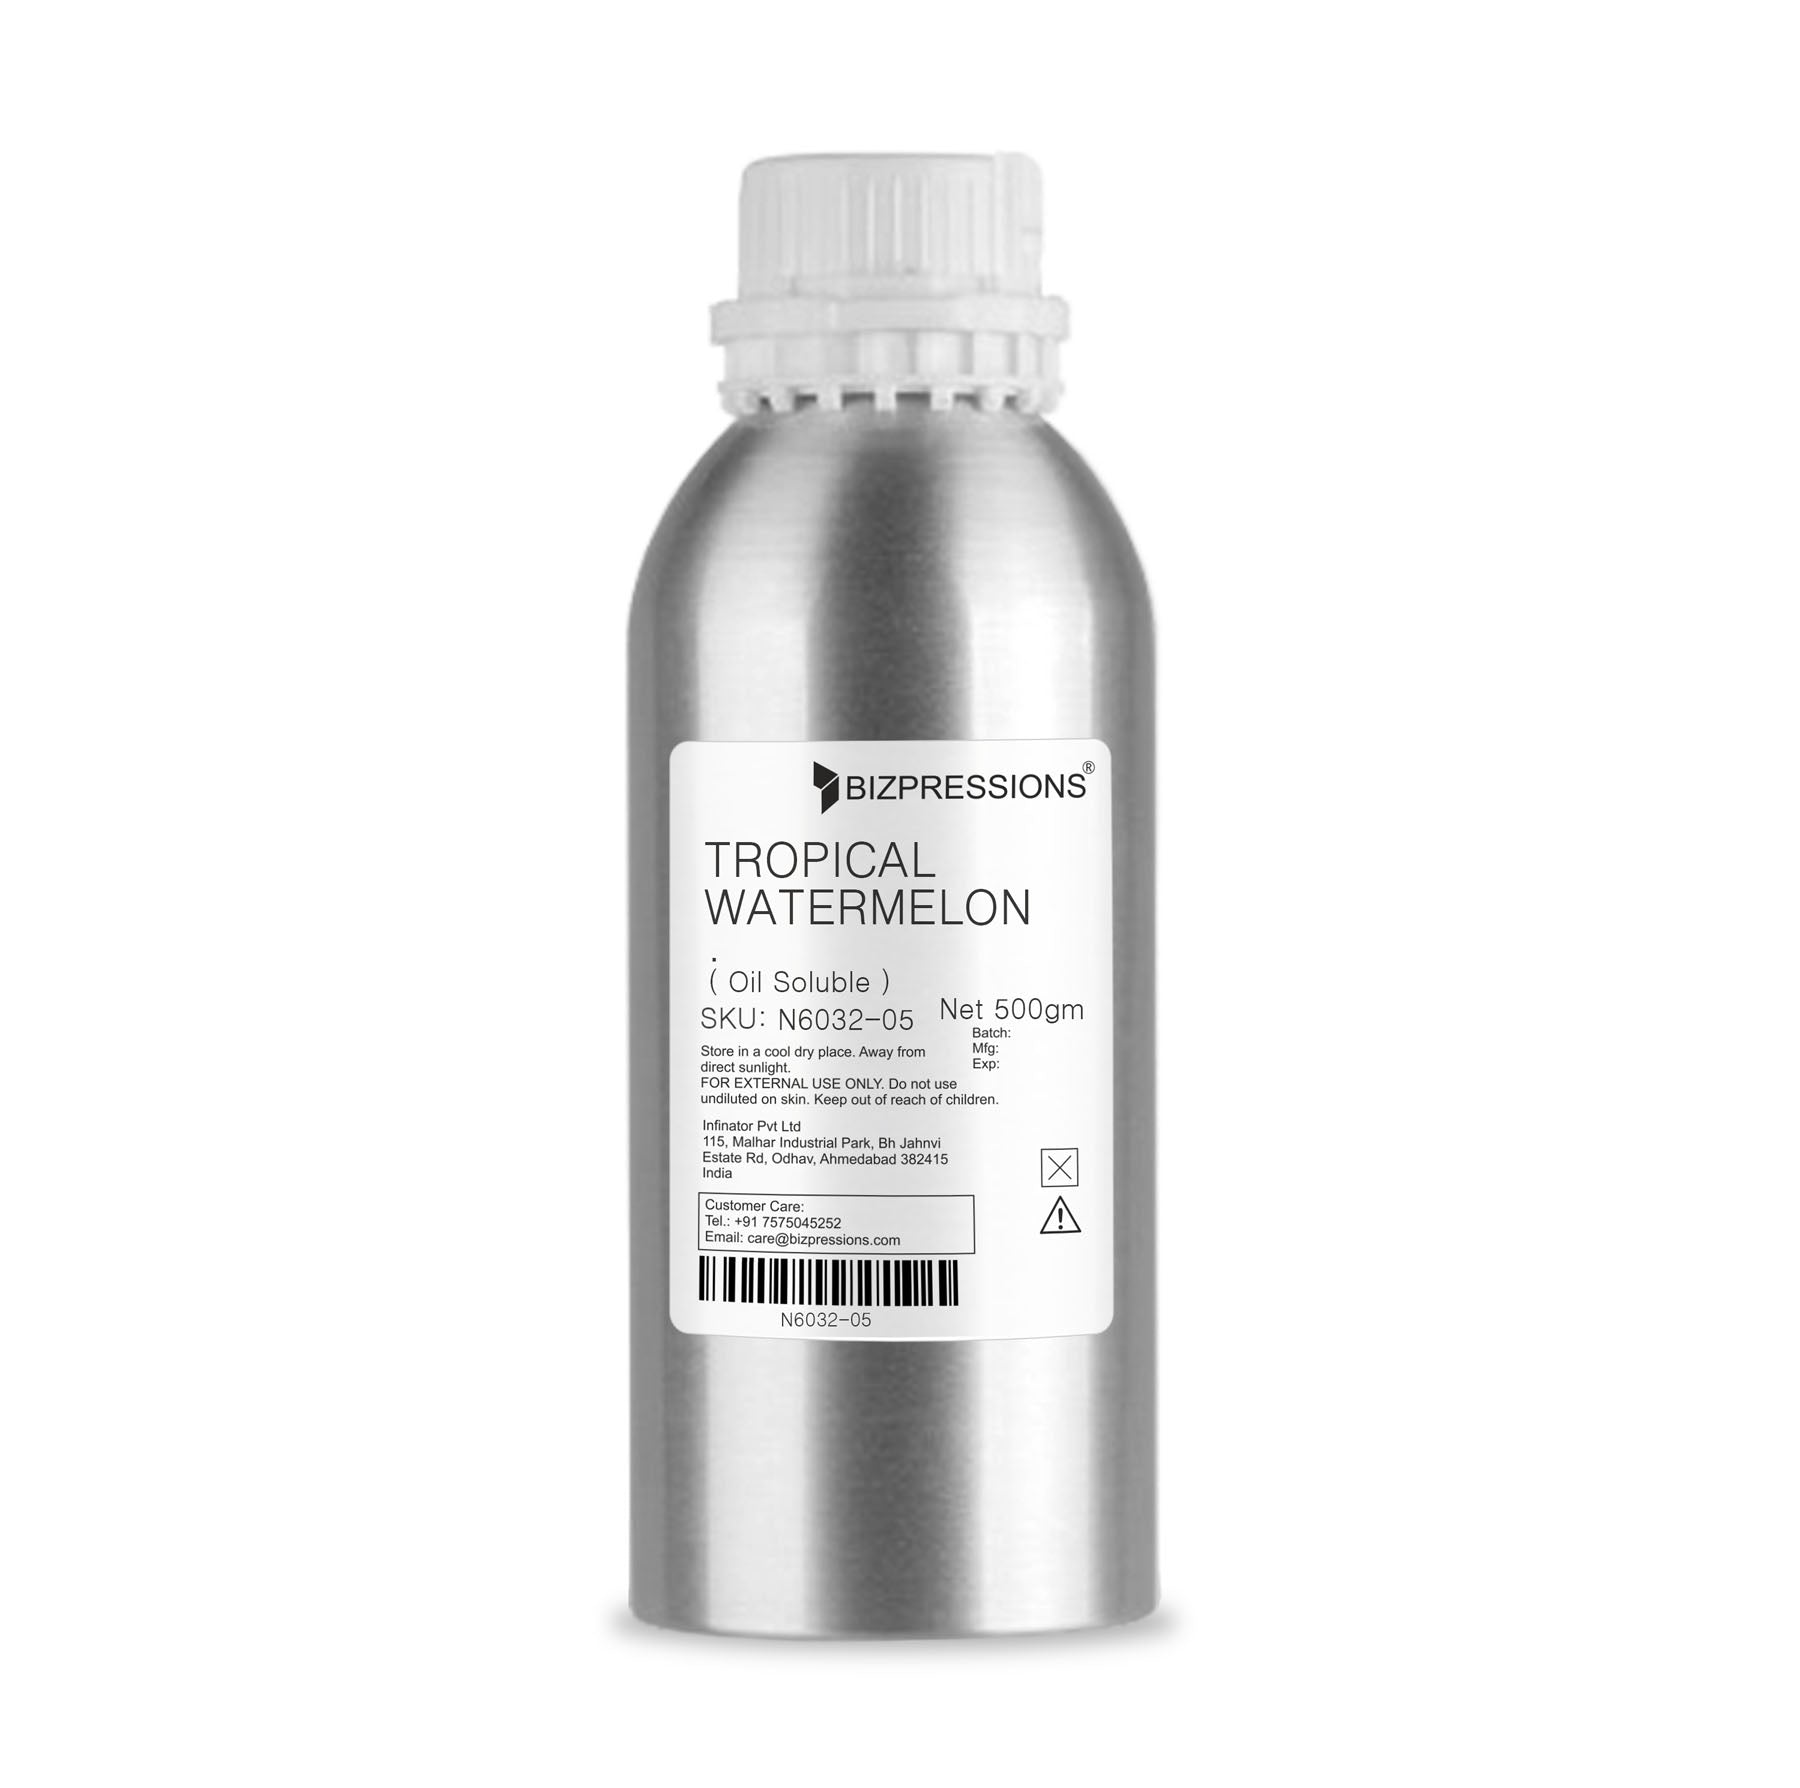 TROPICAL WATERMELON - Fragrance ( Oil Soluble ) - 500 gm